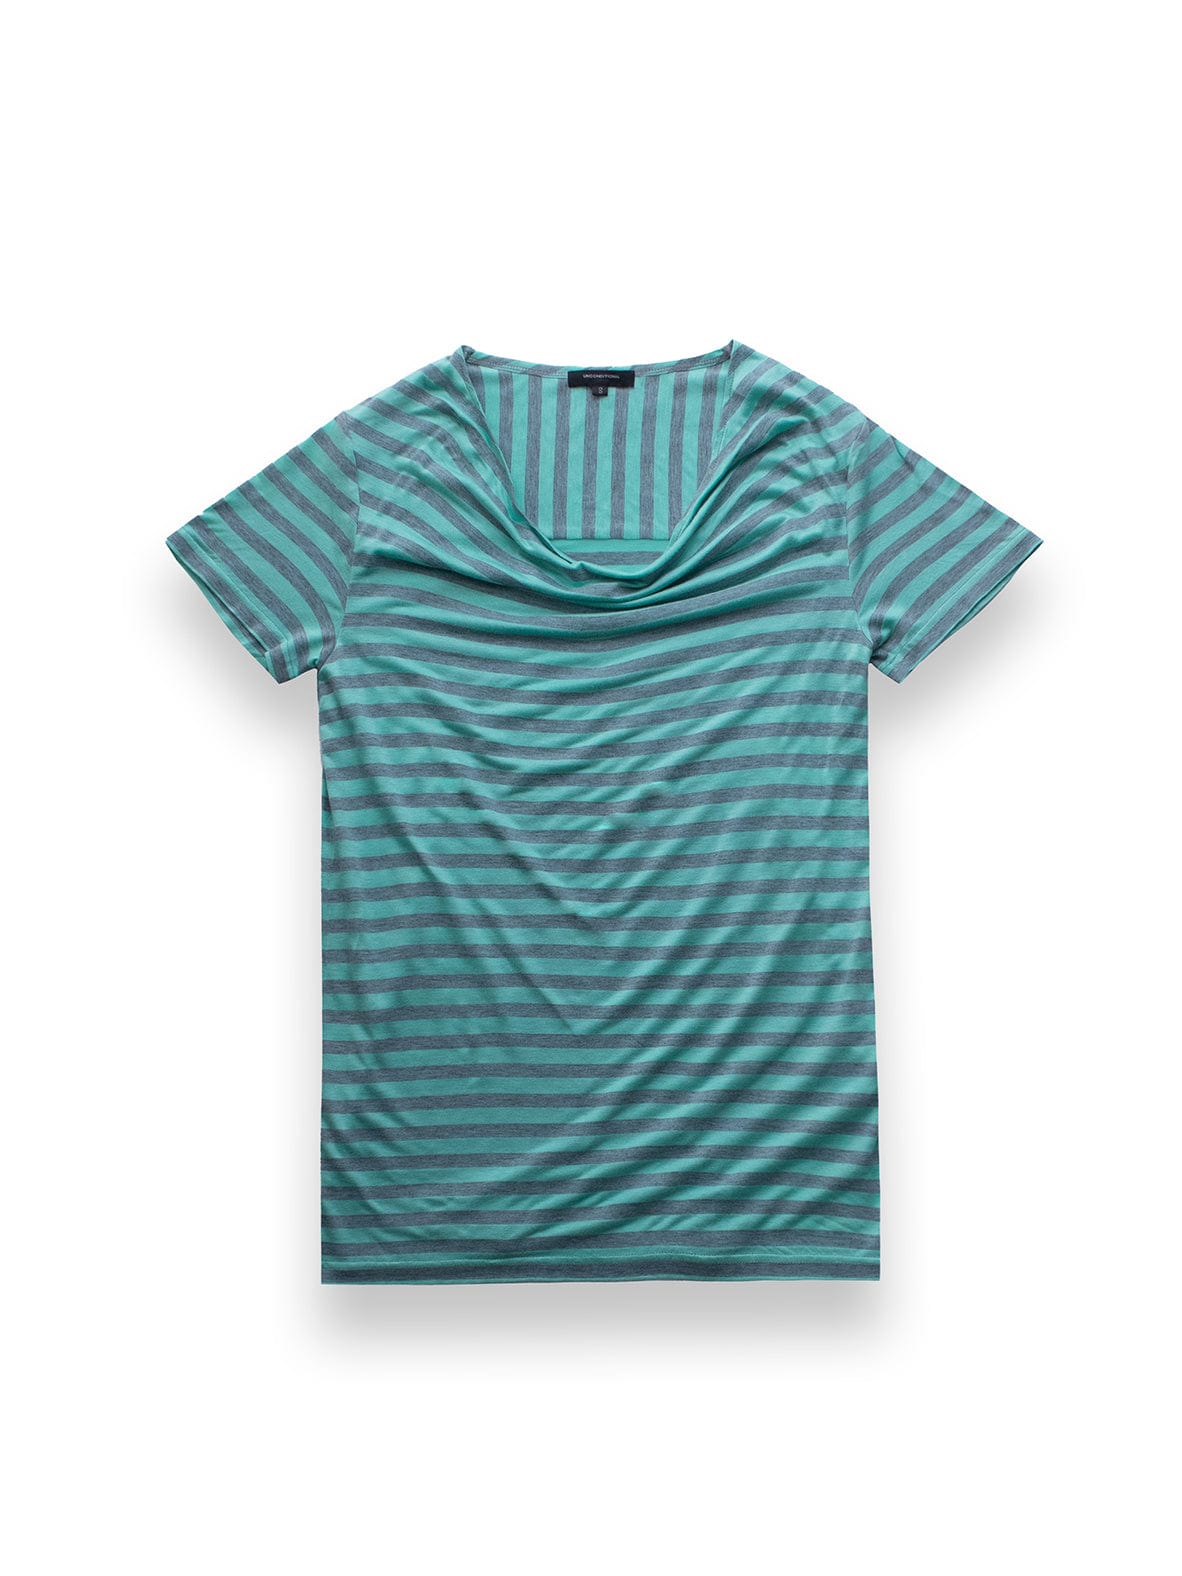 Aqua Coloured T-Shirt With Grey Striped Details